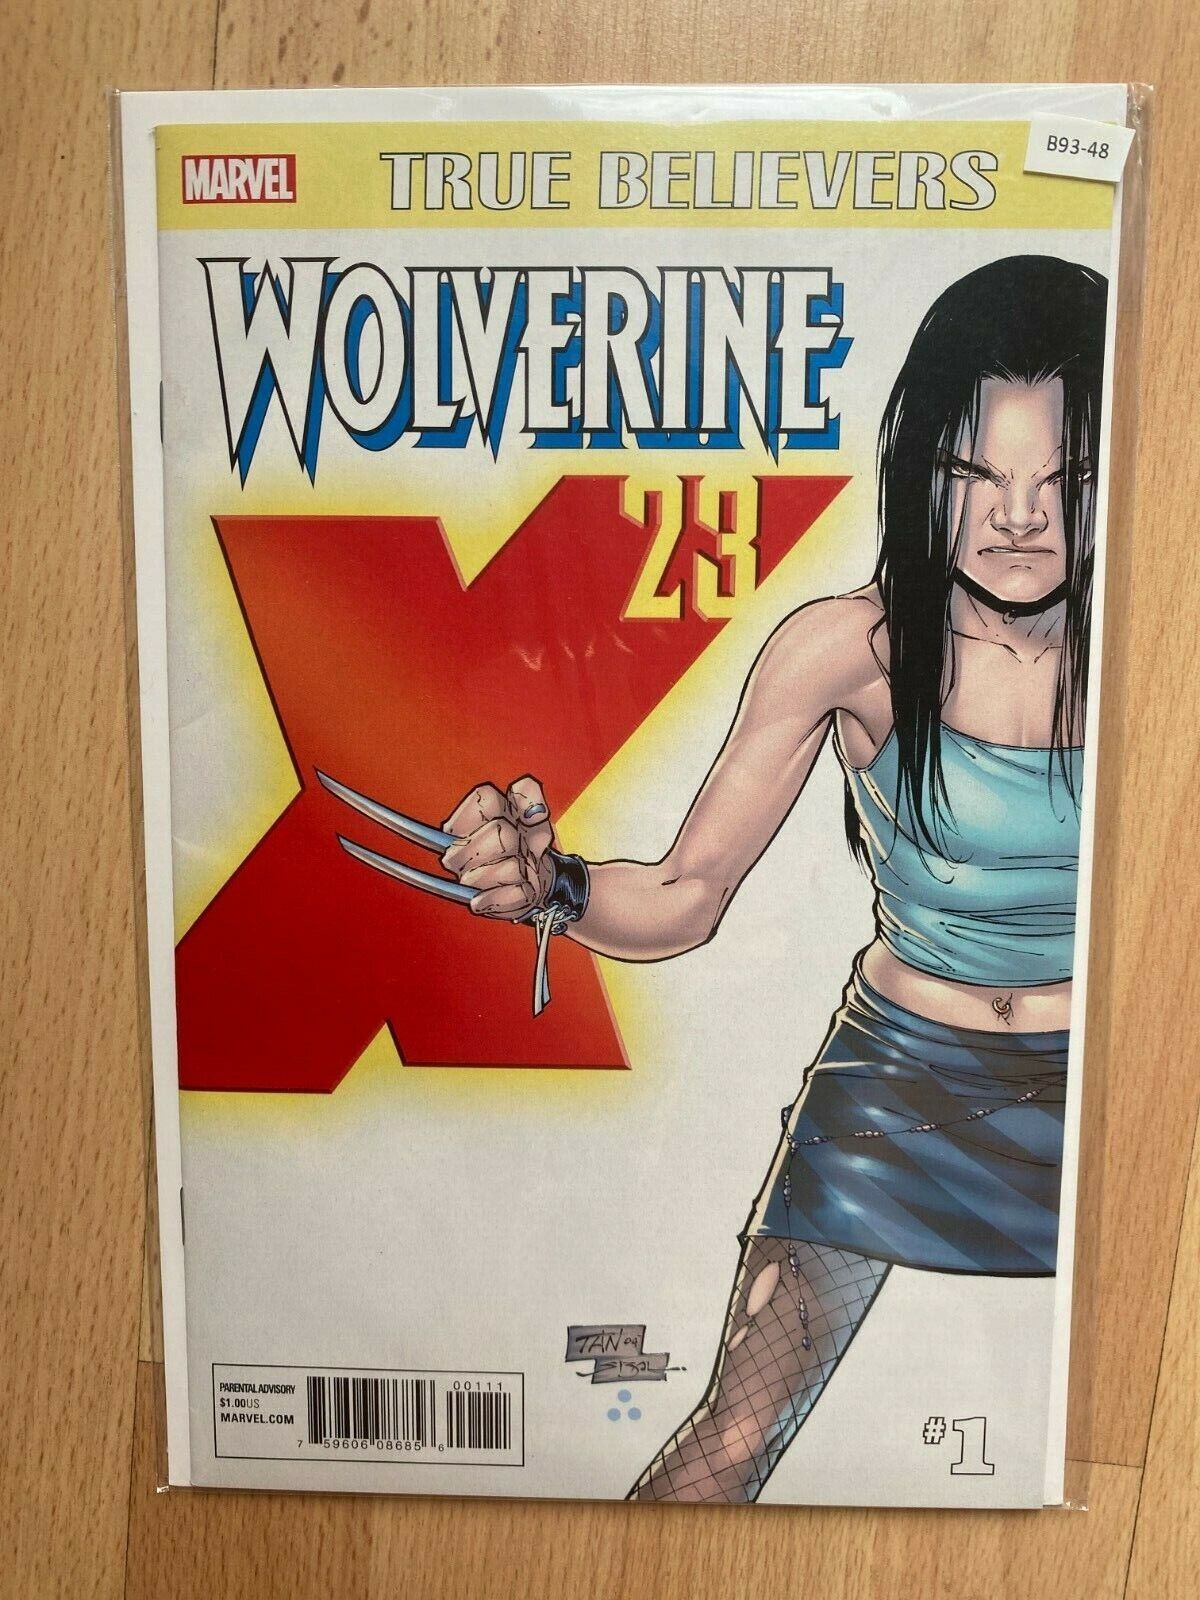 True Believers 1 Wolverine X-23 - Comic Book - B93-48